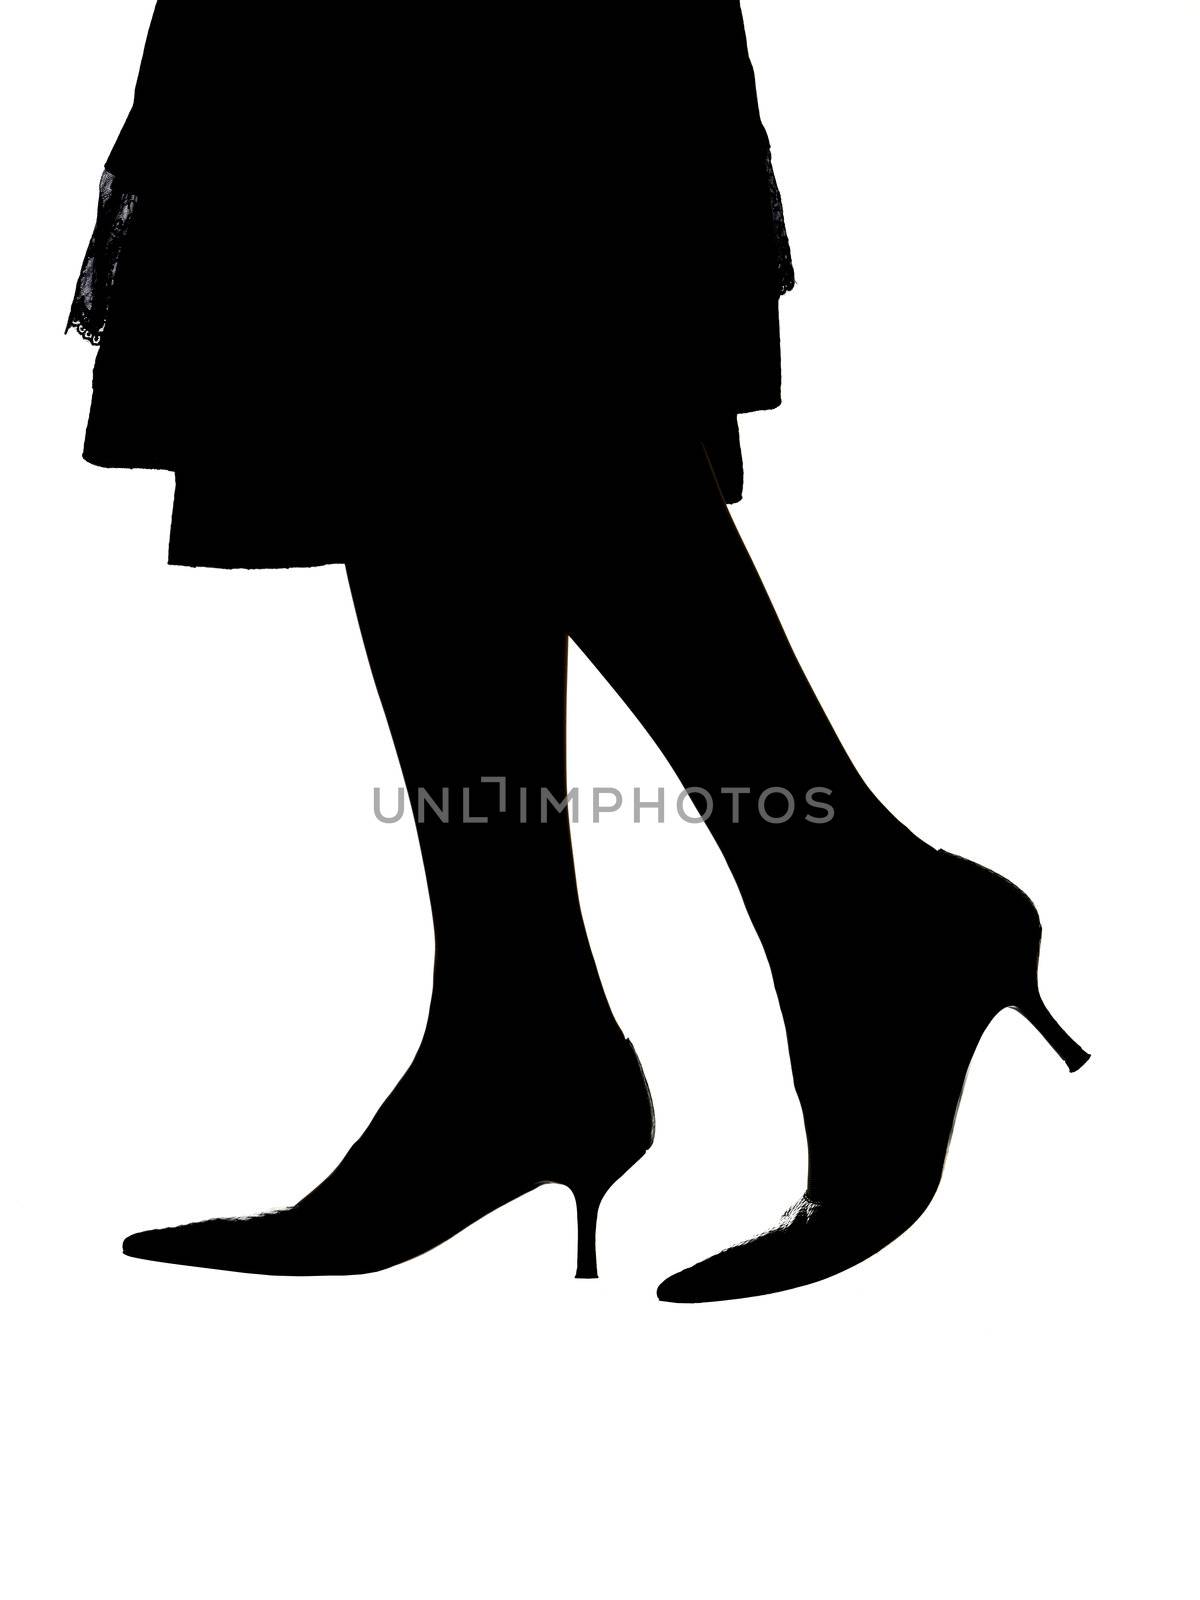 a woman's silhouette by gemenacom